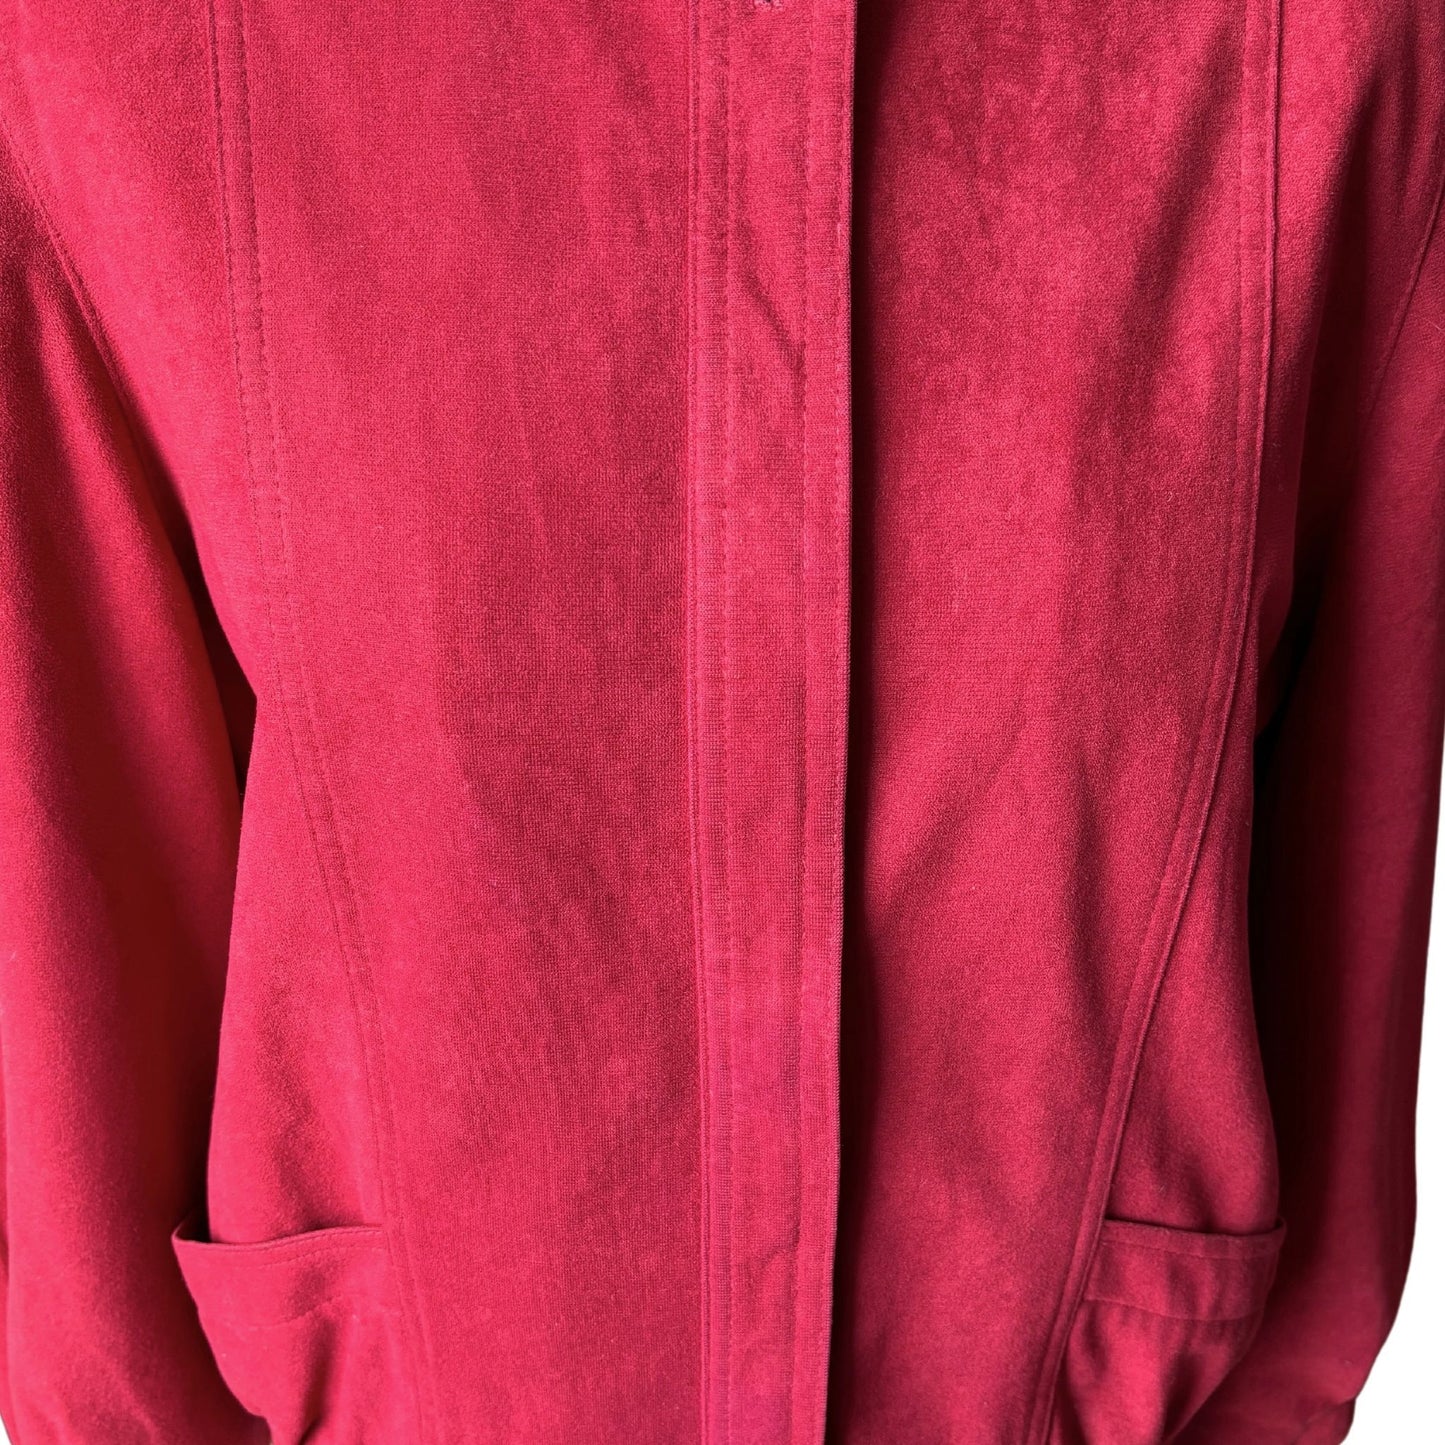 Vintage 80s Cherry Red Moleskin Blouson Style Jacket. Approx UK size 8- 12